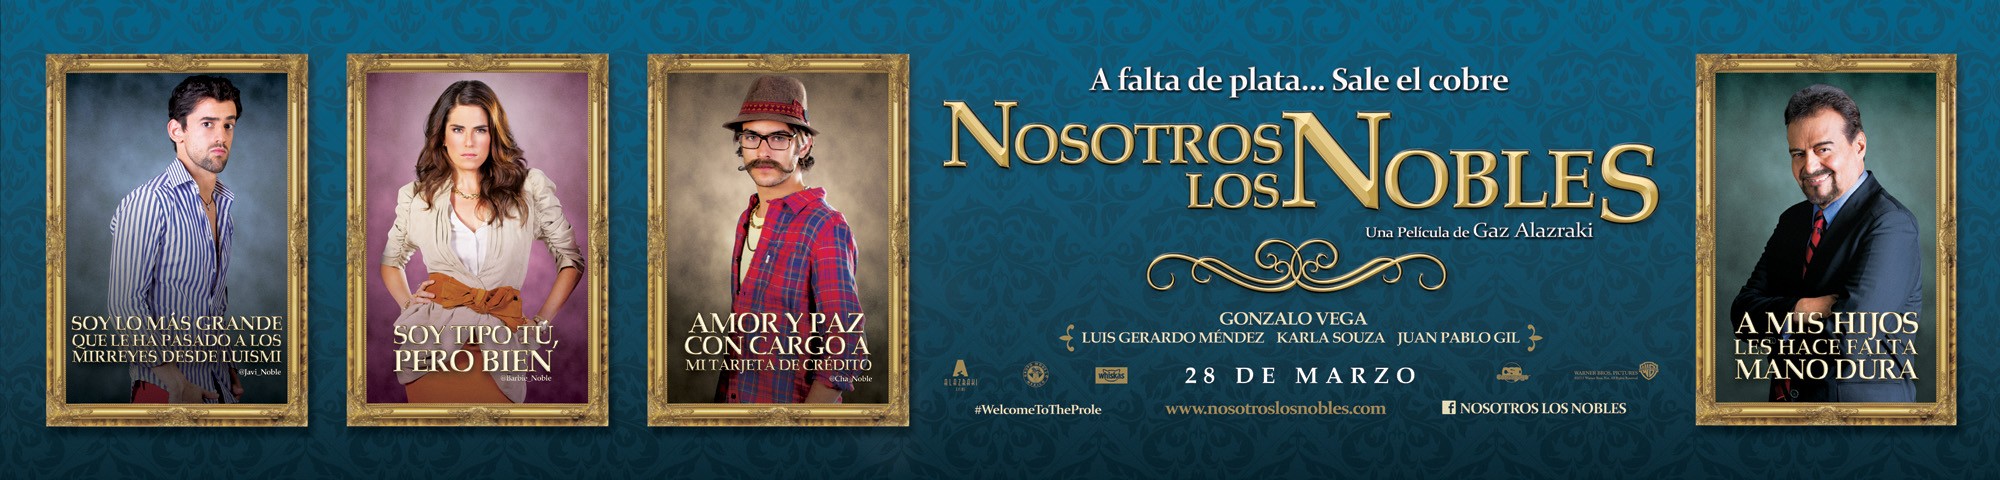 Mega Sized Movie Poster Image for Nosotros los Nobles (#19 of 20)